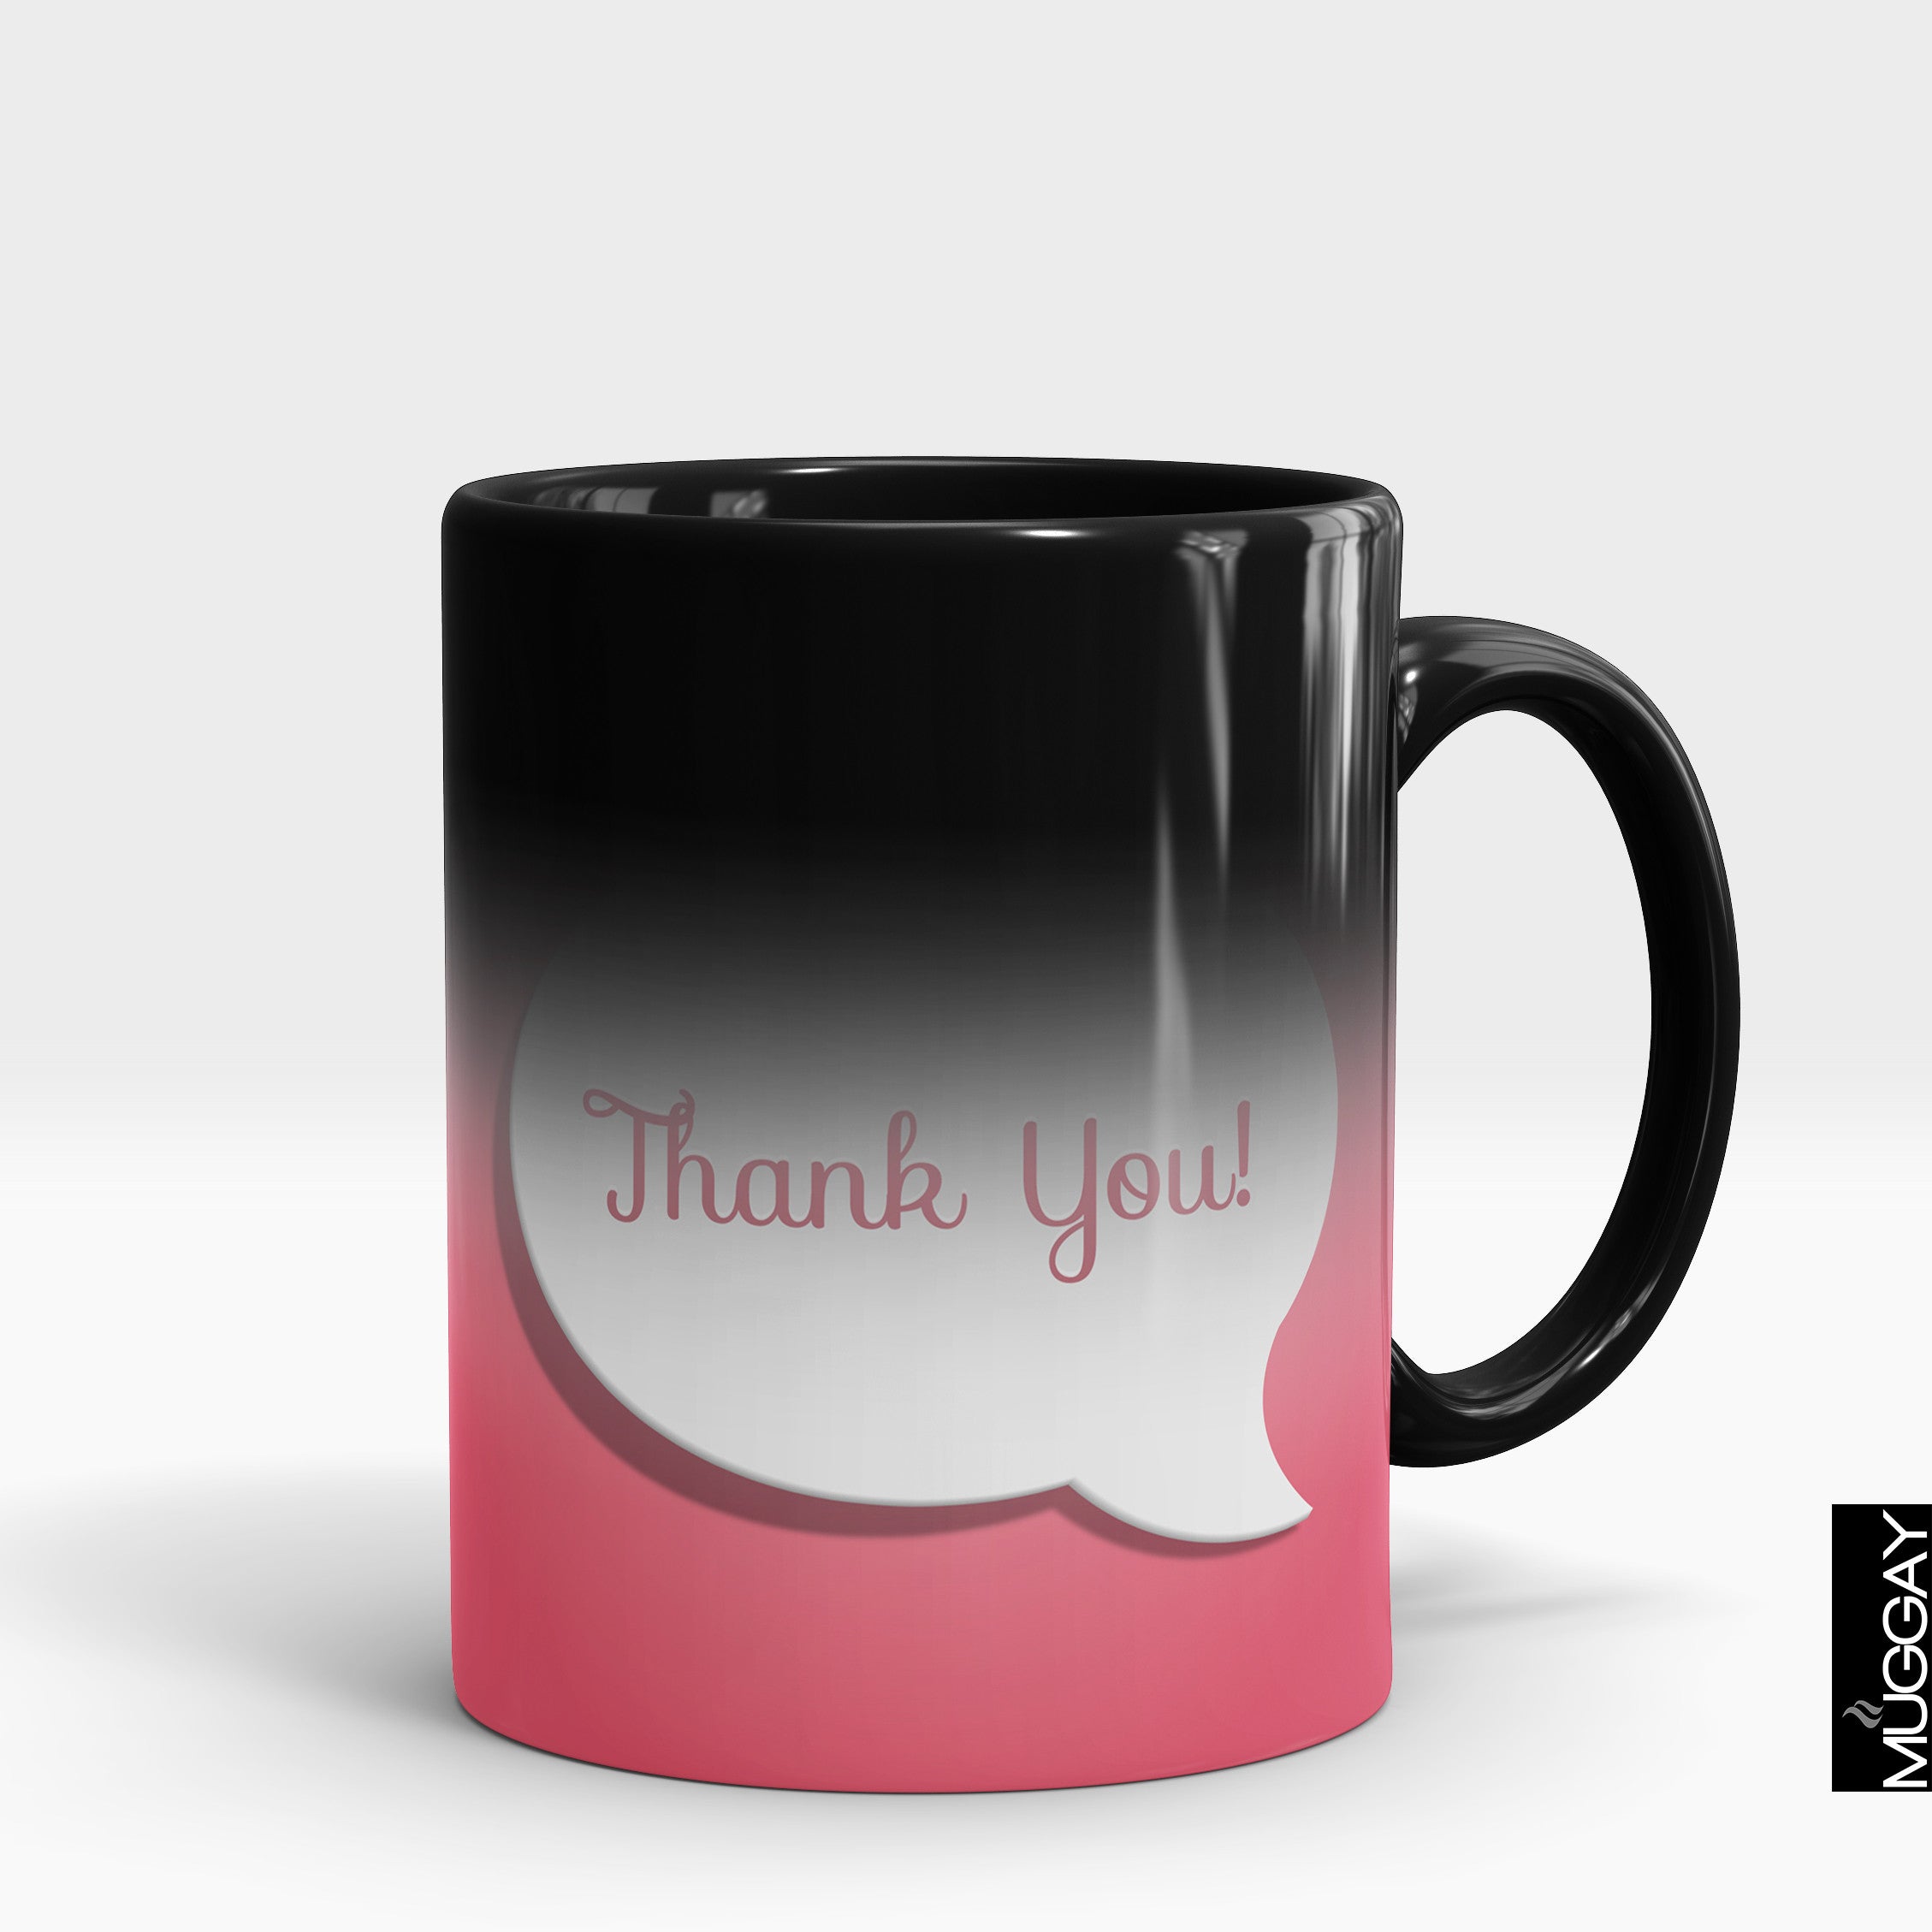 Thankyou mugs1